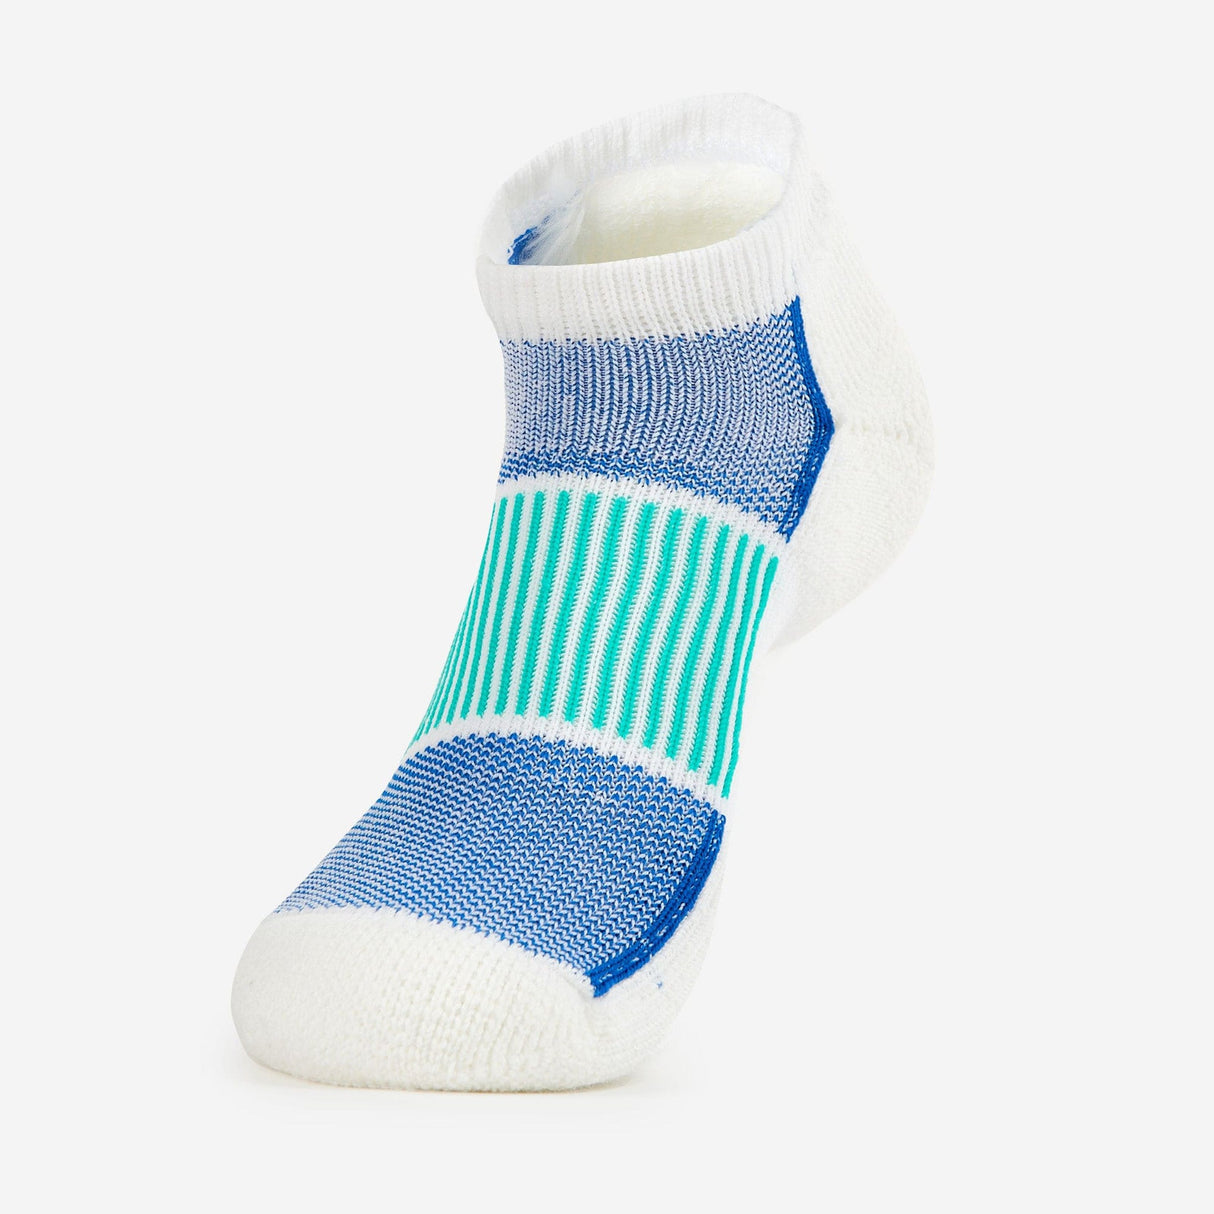 Thorlo Mens 84N Running Maximum Cushion Low Cut Socks  -  Large / White/Blue